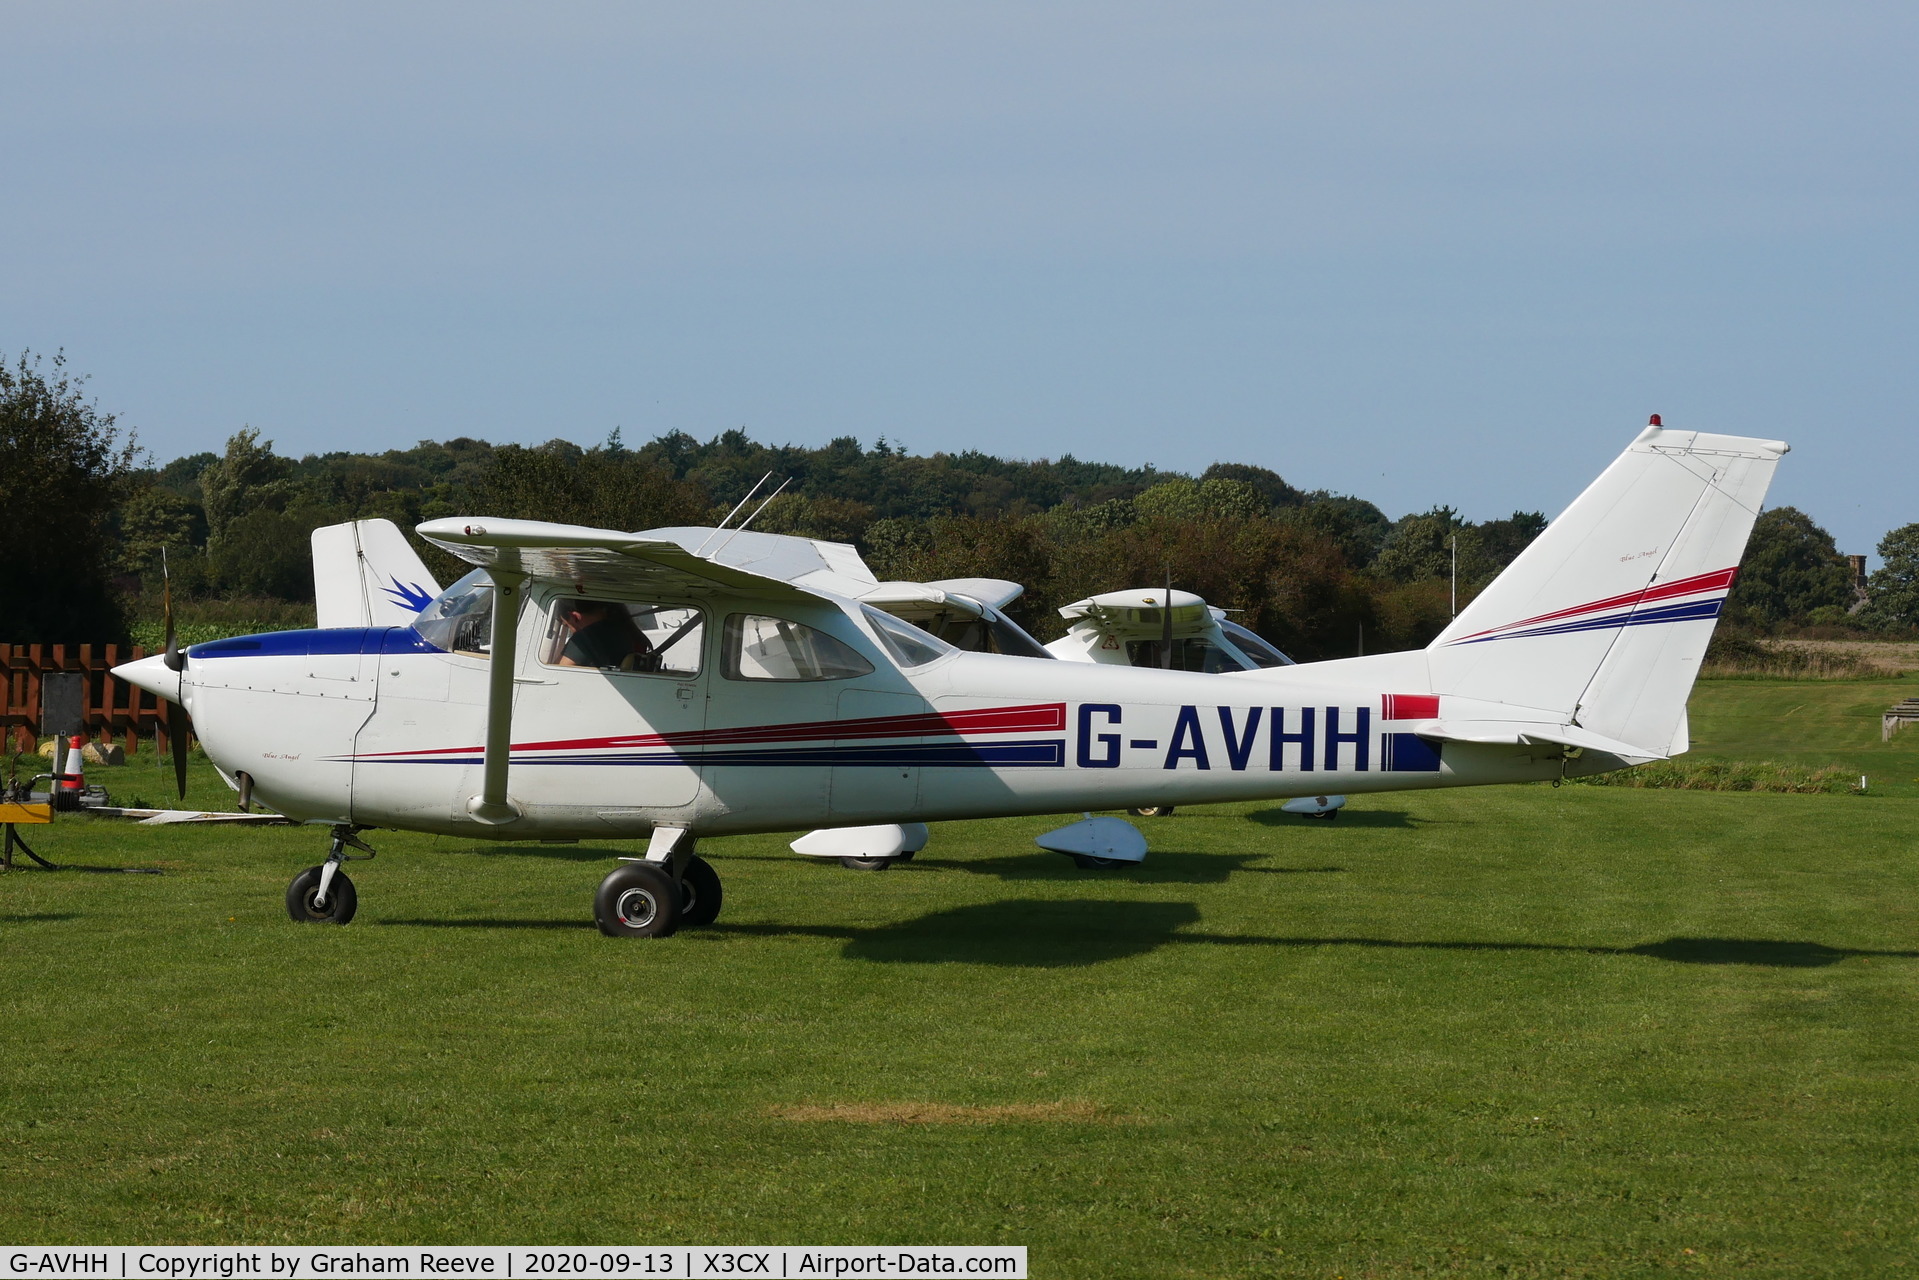 G-AVHH, 1967 Reims F172H Skyhawk C/N 0337, Parked at Northrepps.